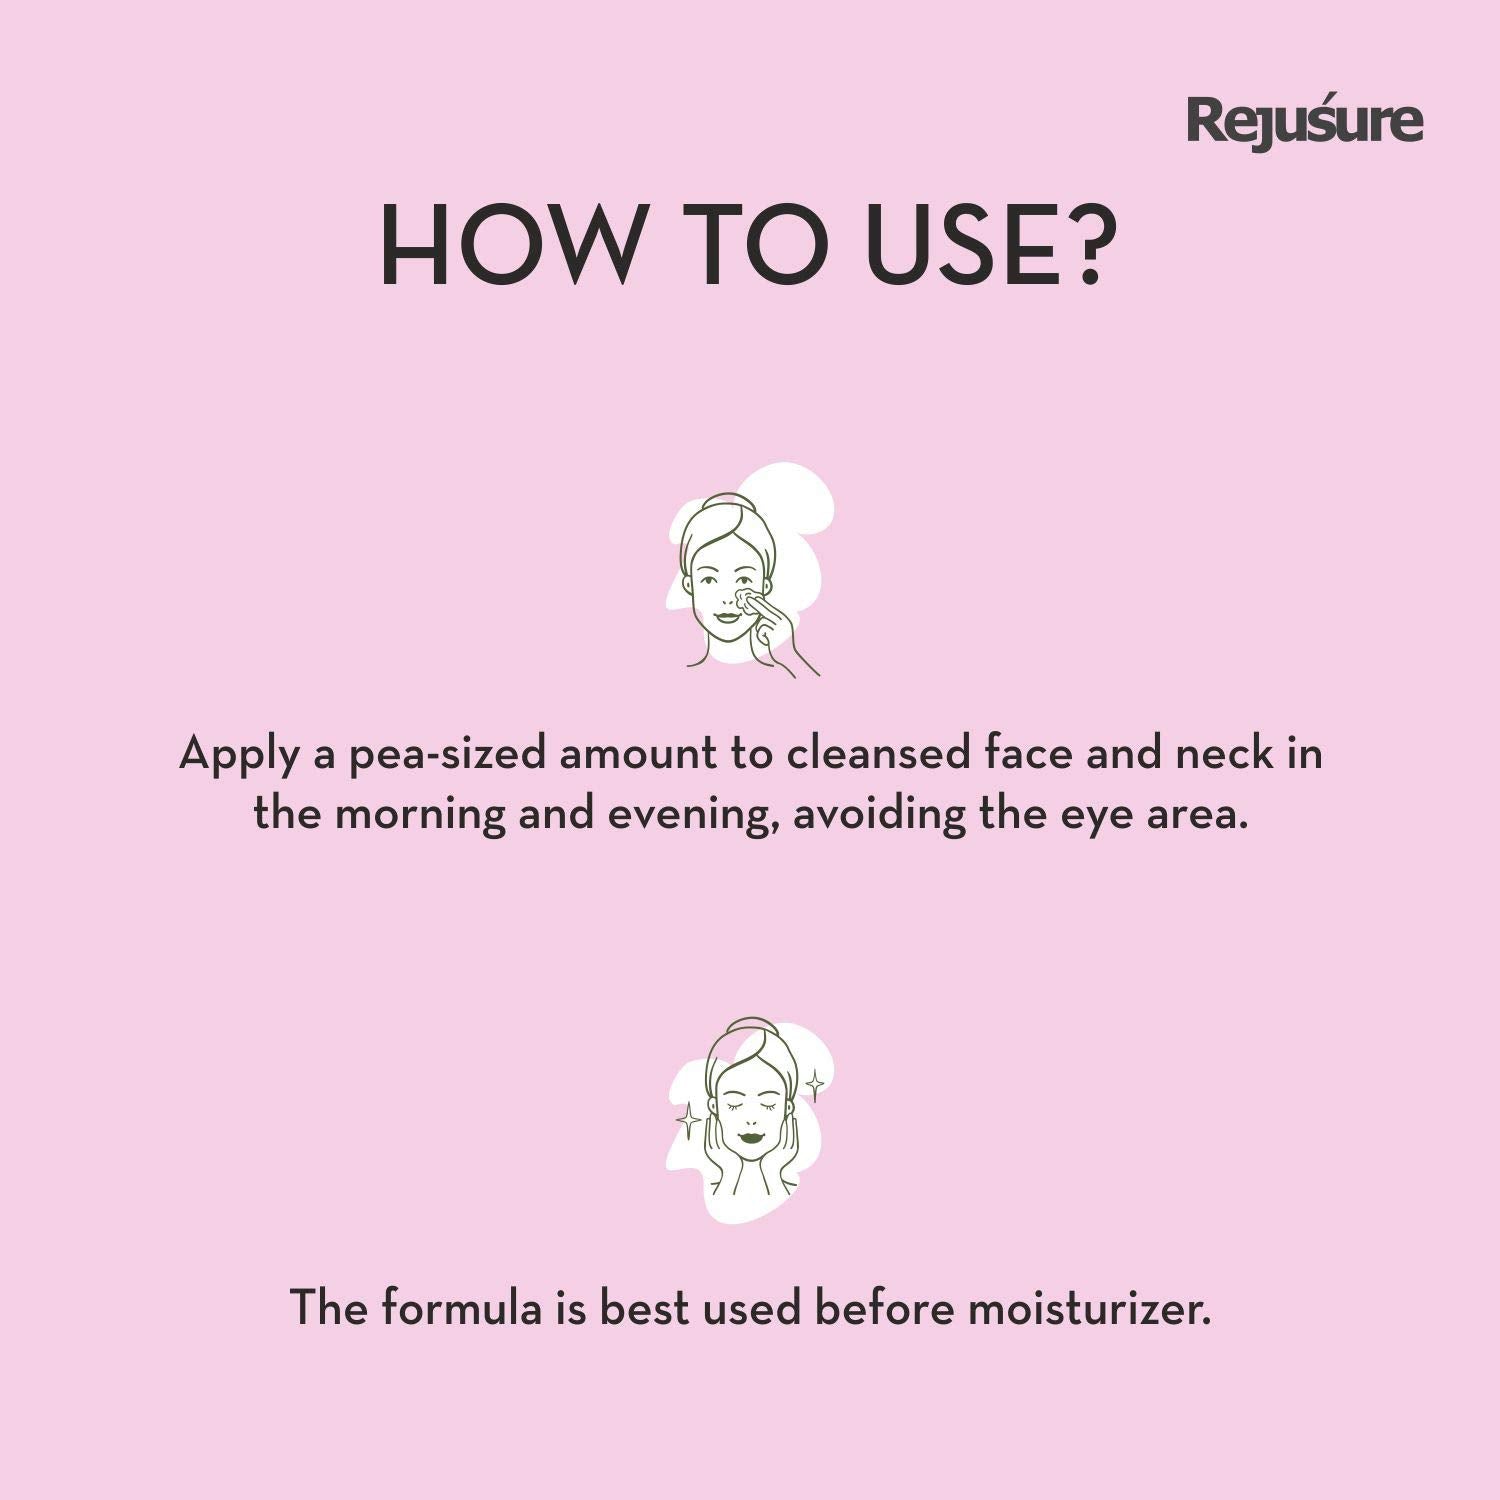 Rejusure Polyglutamic Acid Facial Serum Targets Dehydrated Skin & Helps Maintain Skin Moisture Levels – 30ml (Pack of 3)